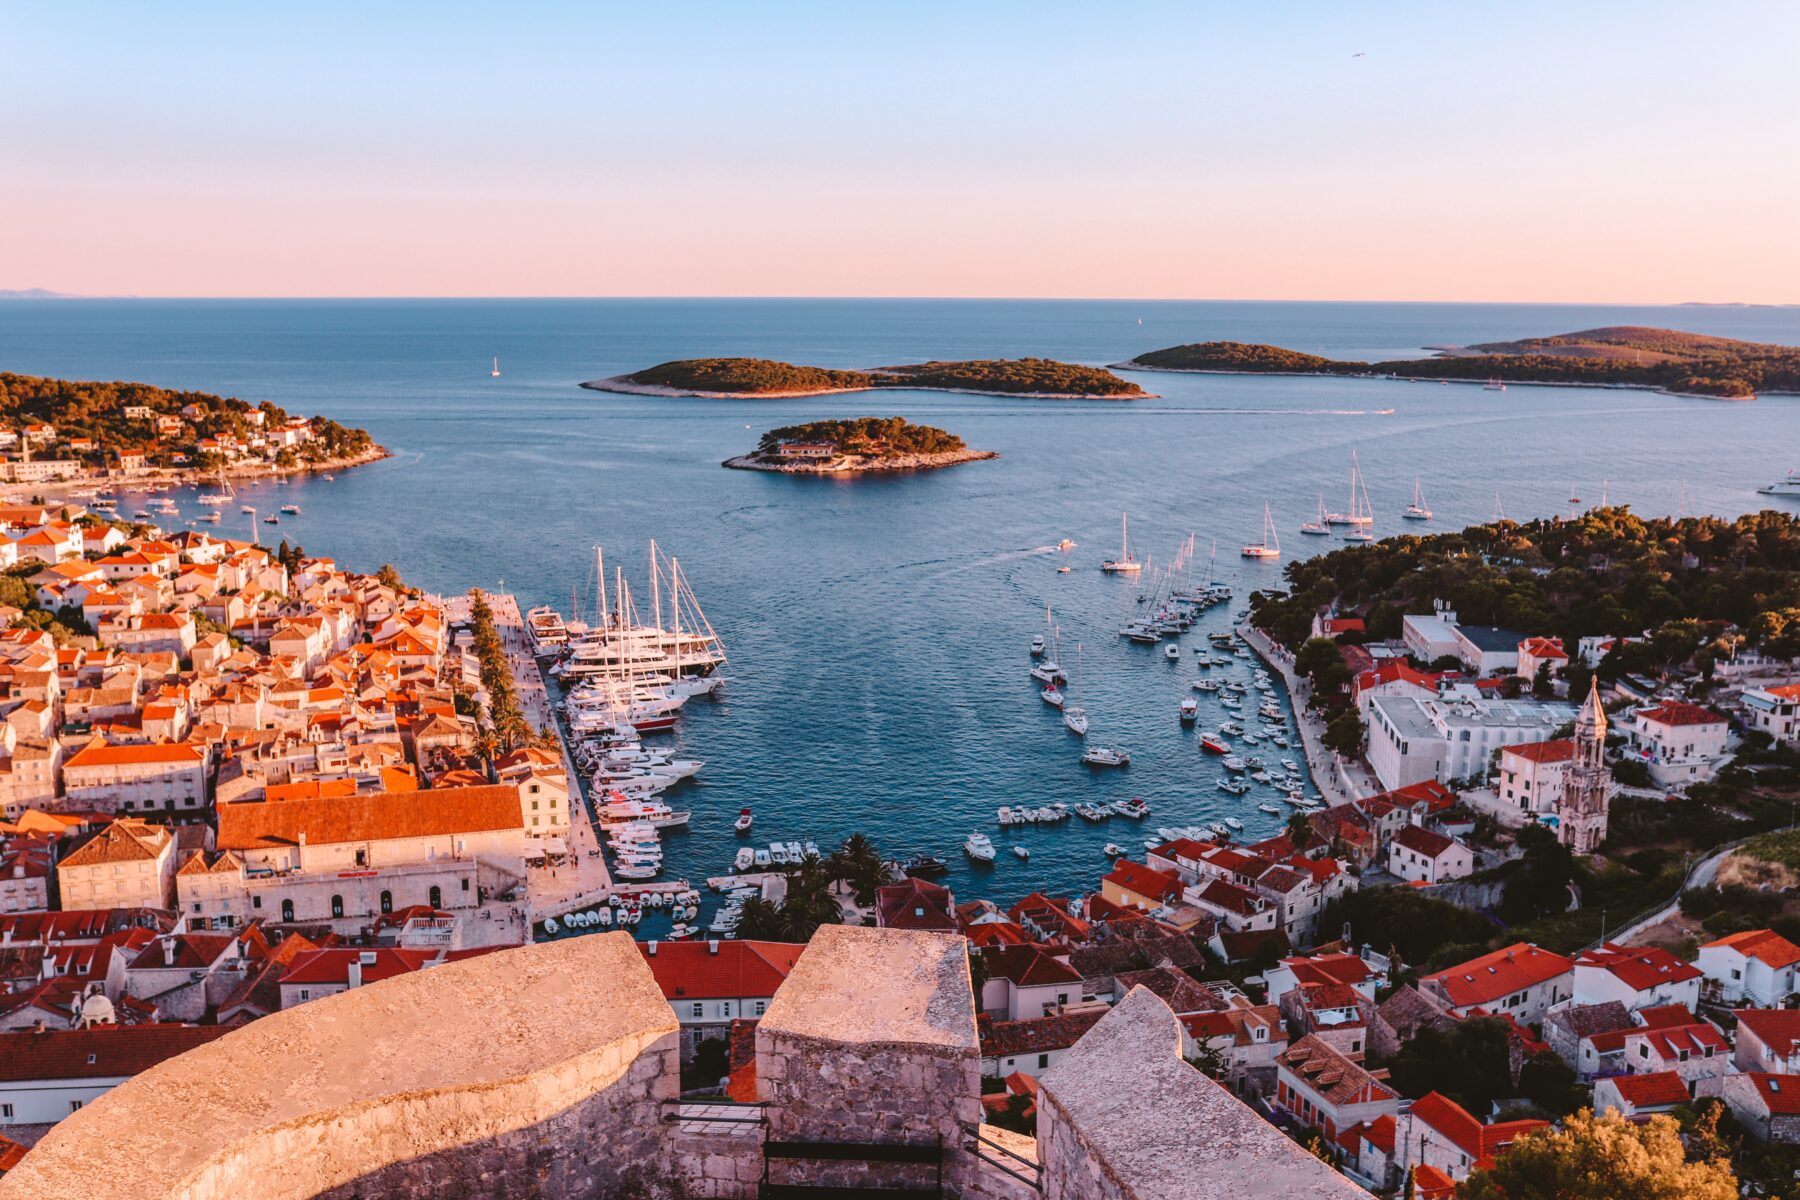 Mooiste plekken van Kroatië is Hvar, het Ibiza van Kroatië